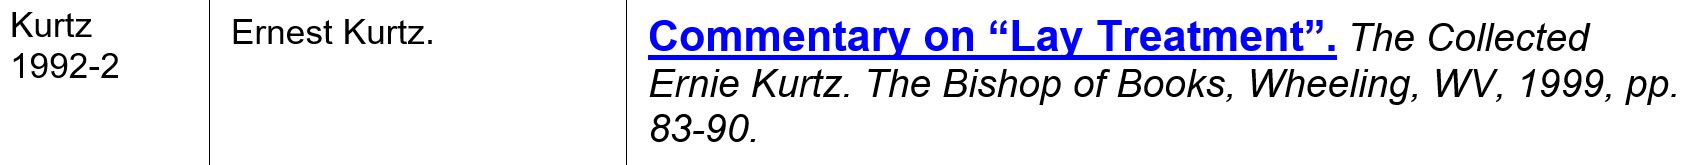 kurtz 1992-2